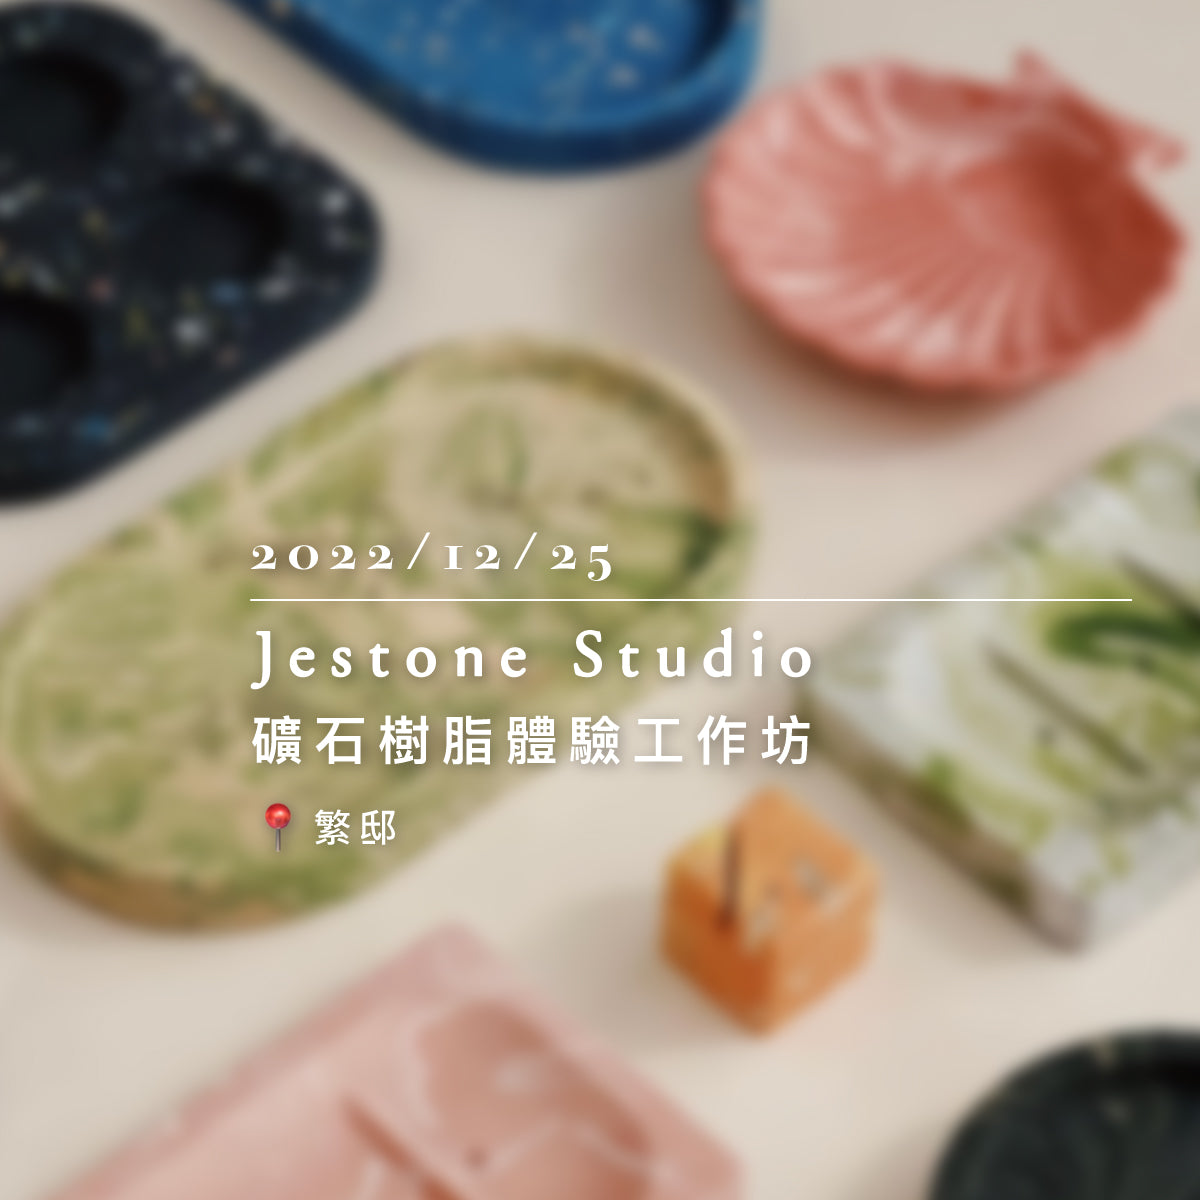 Jestone Studio 礦石樹脂體驗工作坊 @ 繁邸